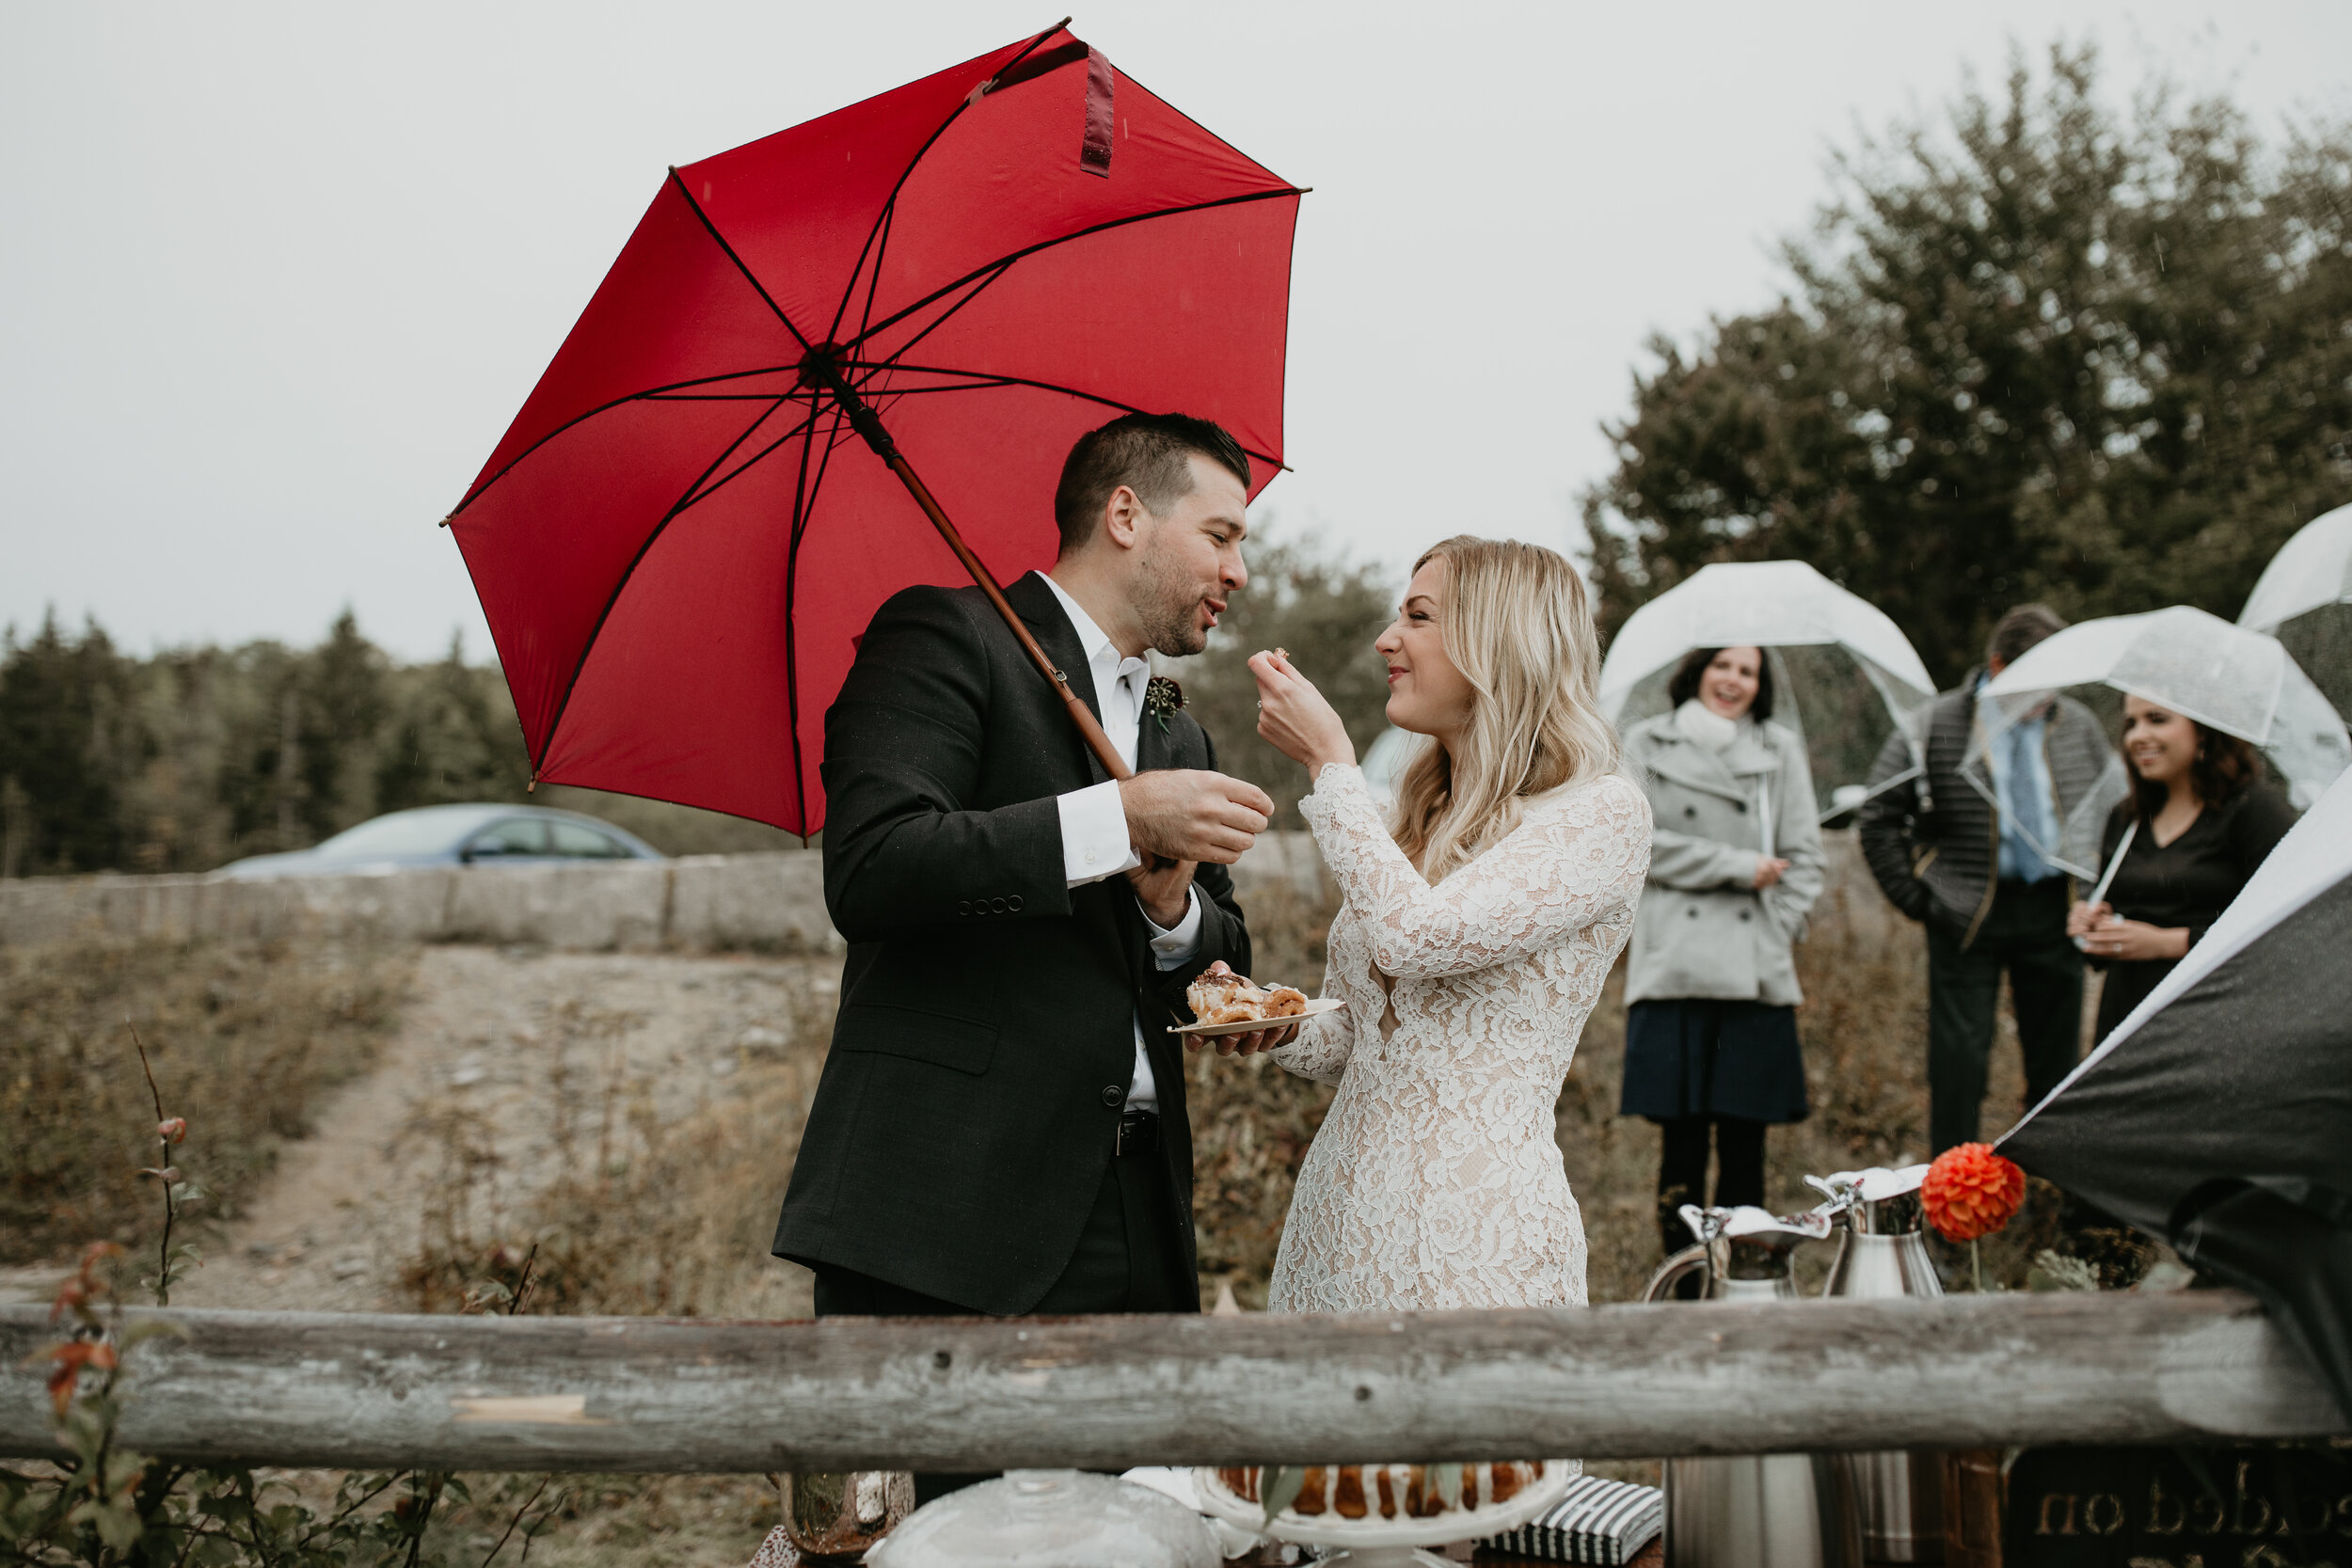 Nicole-Daacke-Photography-Acadia-national-park-elopement-photography-elopement-in-acadia-inspiration-maine-intimate-wedding-destination-elopement-photographer-rainy-day-maine-coast-bar-harbor-elopement-photography-141.jpg